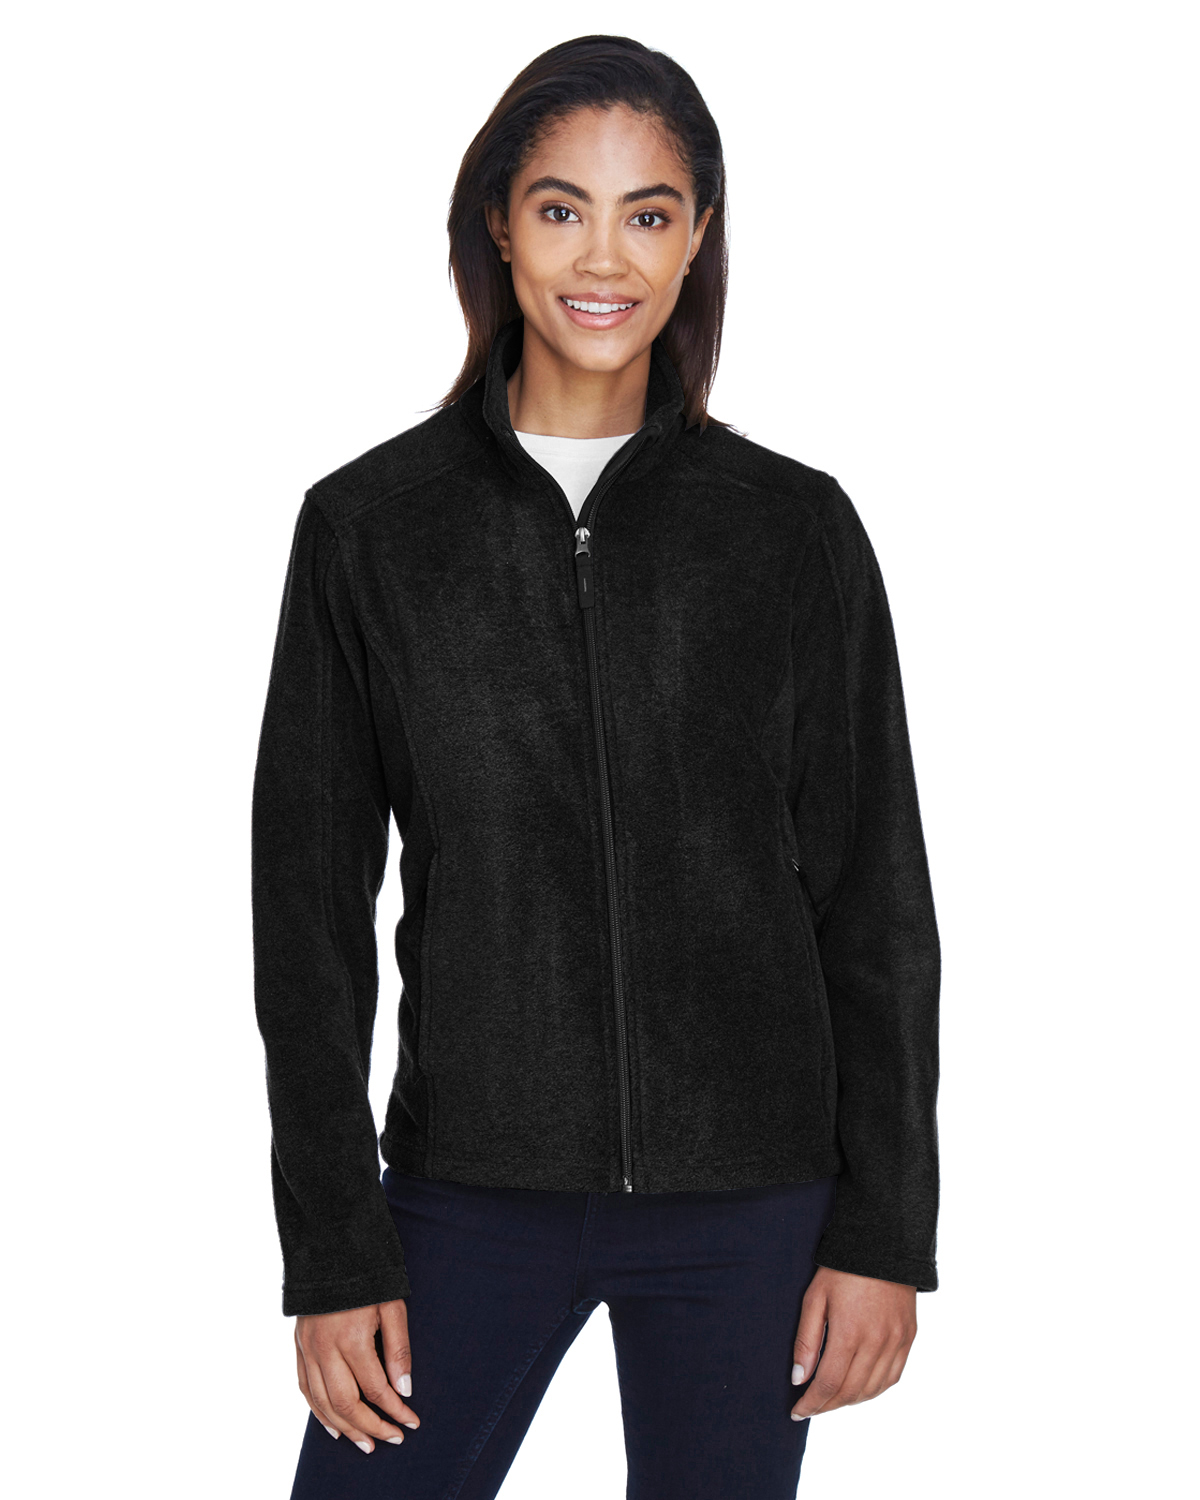 https://images.shirtspace.com/fullsize/9roGGkzyFOzDyZFwmmepuA%3D%3D/122638/3210-core-365-78190-ladies-journey-fleece-jacket-front-black.jpg